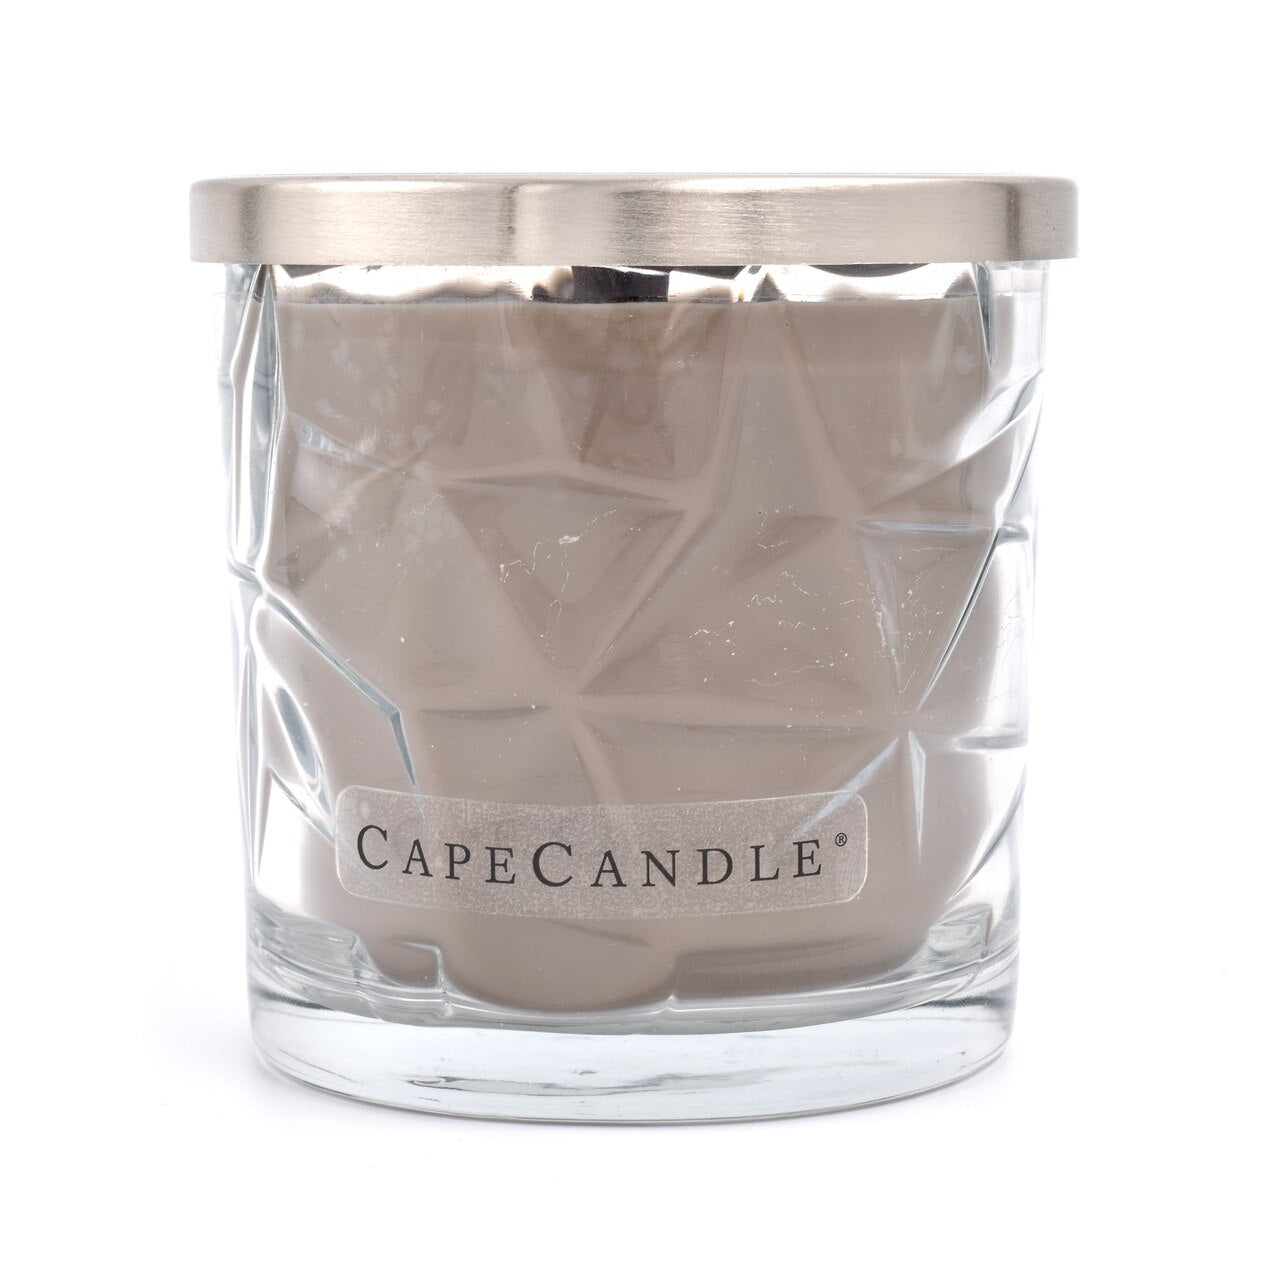 Cape Candle Signature Essentials by Habersham - Woodsmoke & Pumpkin 13.5 oz Wooden Wick Jar